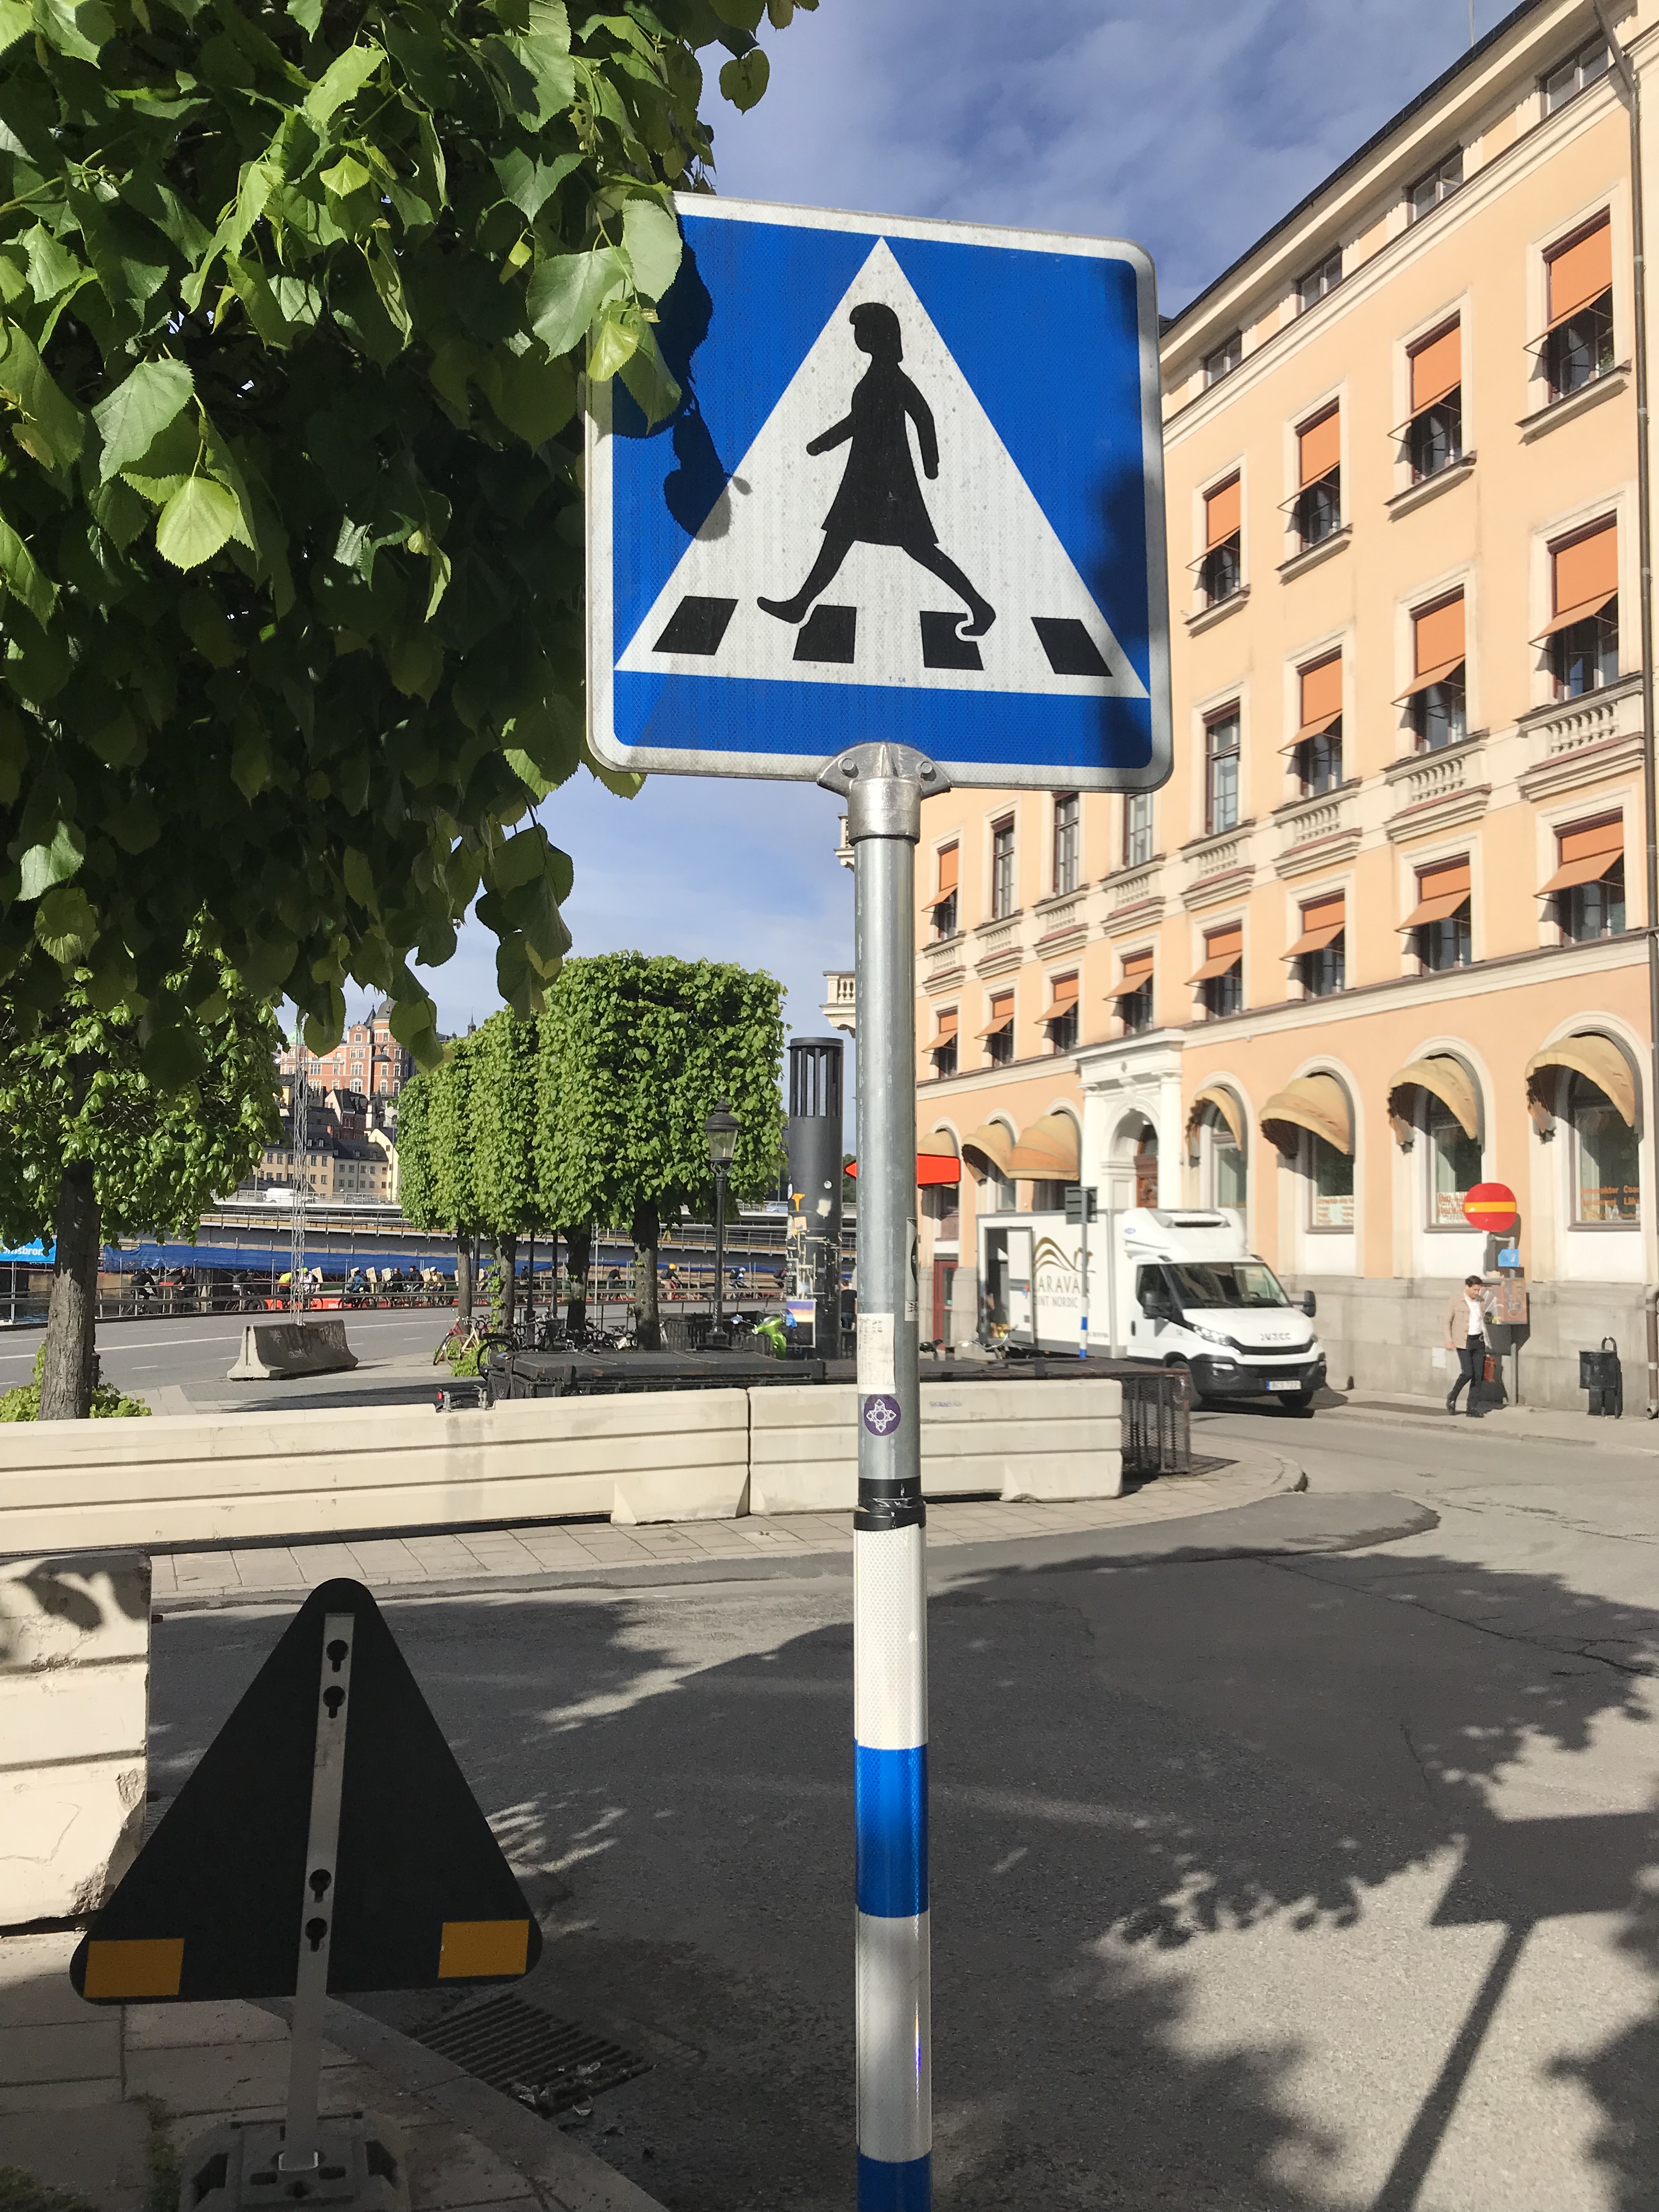 Lady at the Stockholm, Sweden crosswalks (pedestrian crossings)